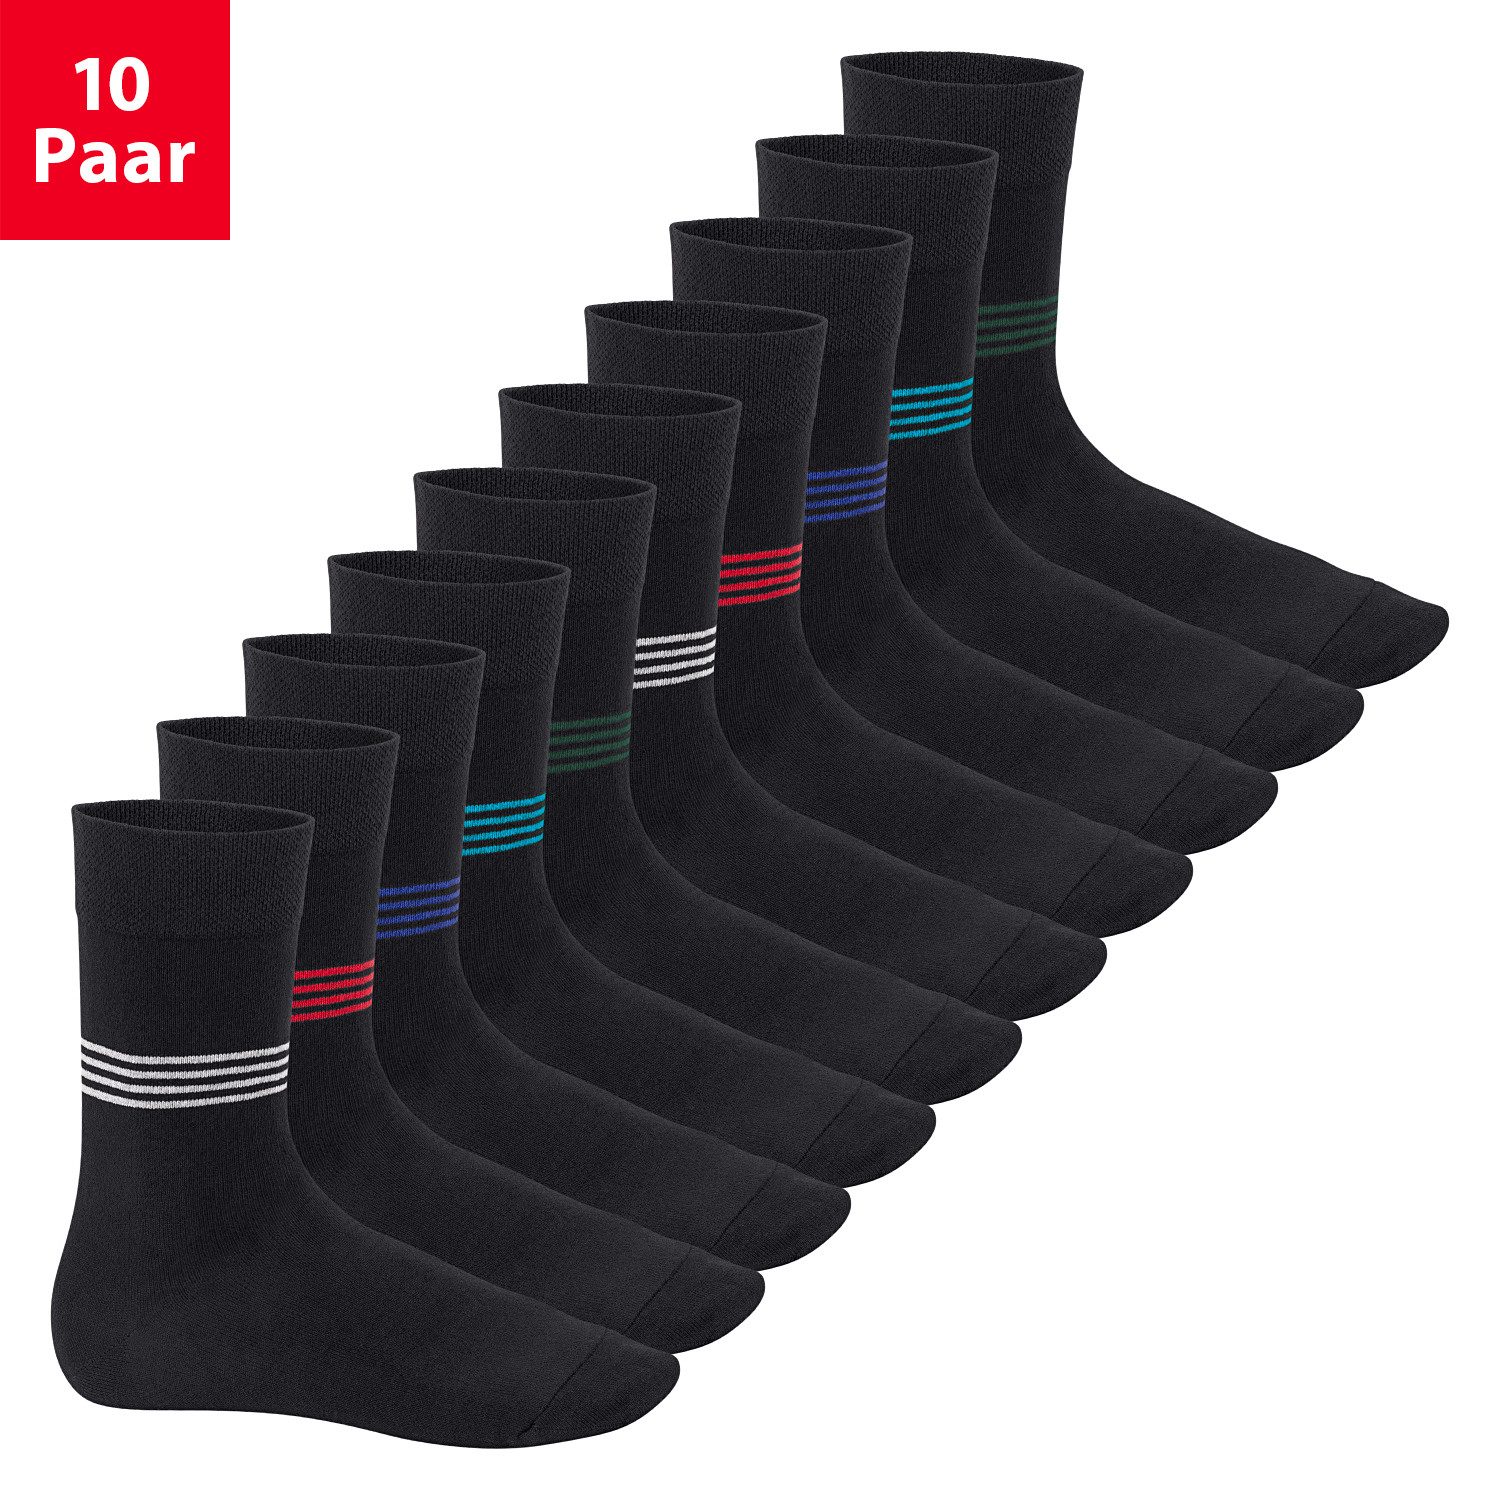 Footstar Businesssocken Herren Motiv Socken (10 Paar) mit diversen Mustern